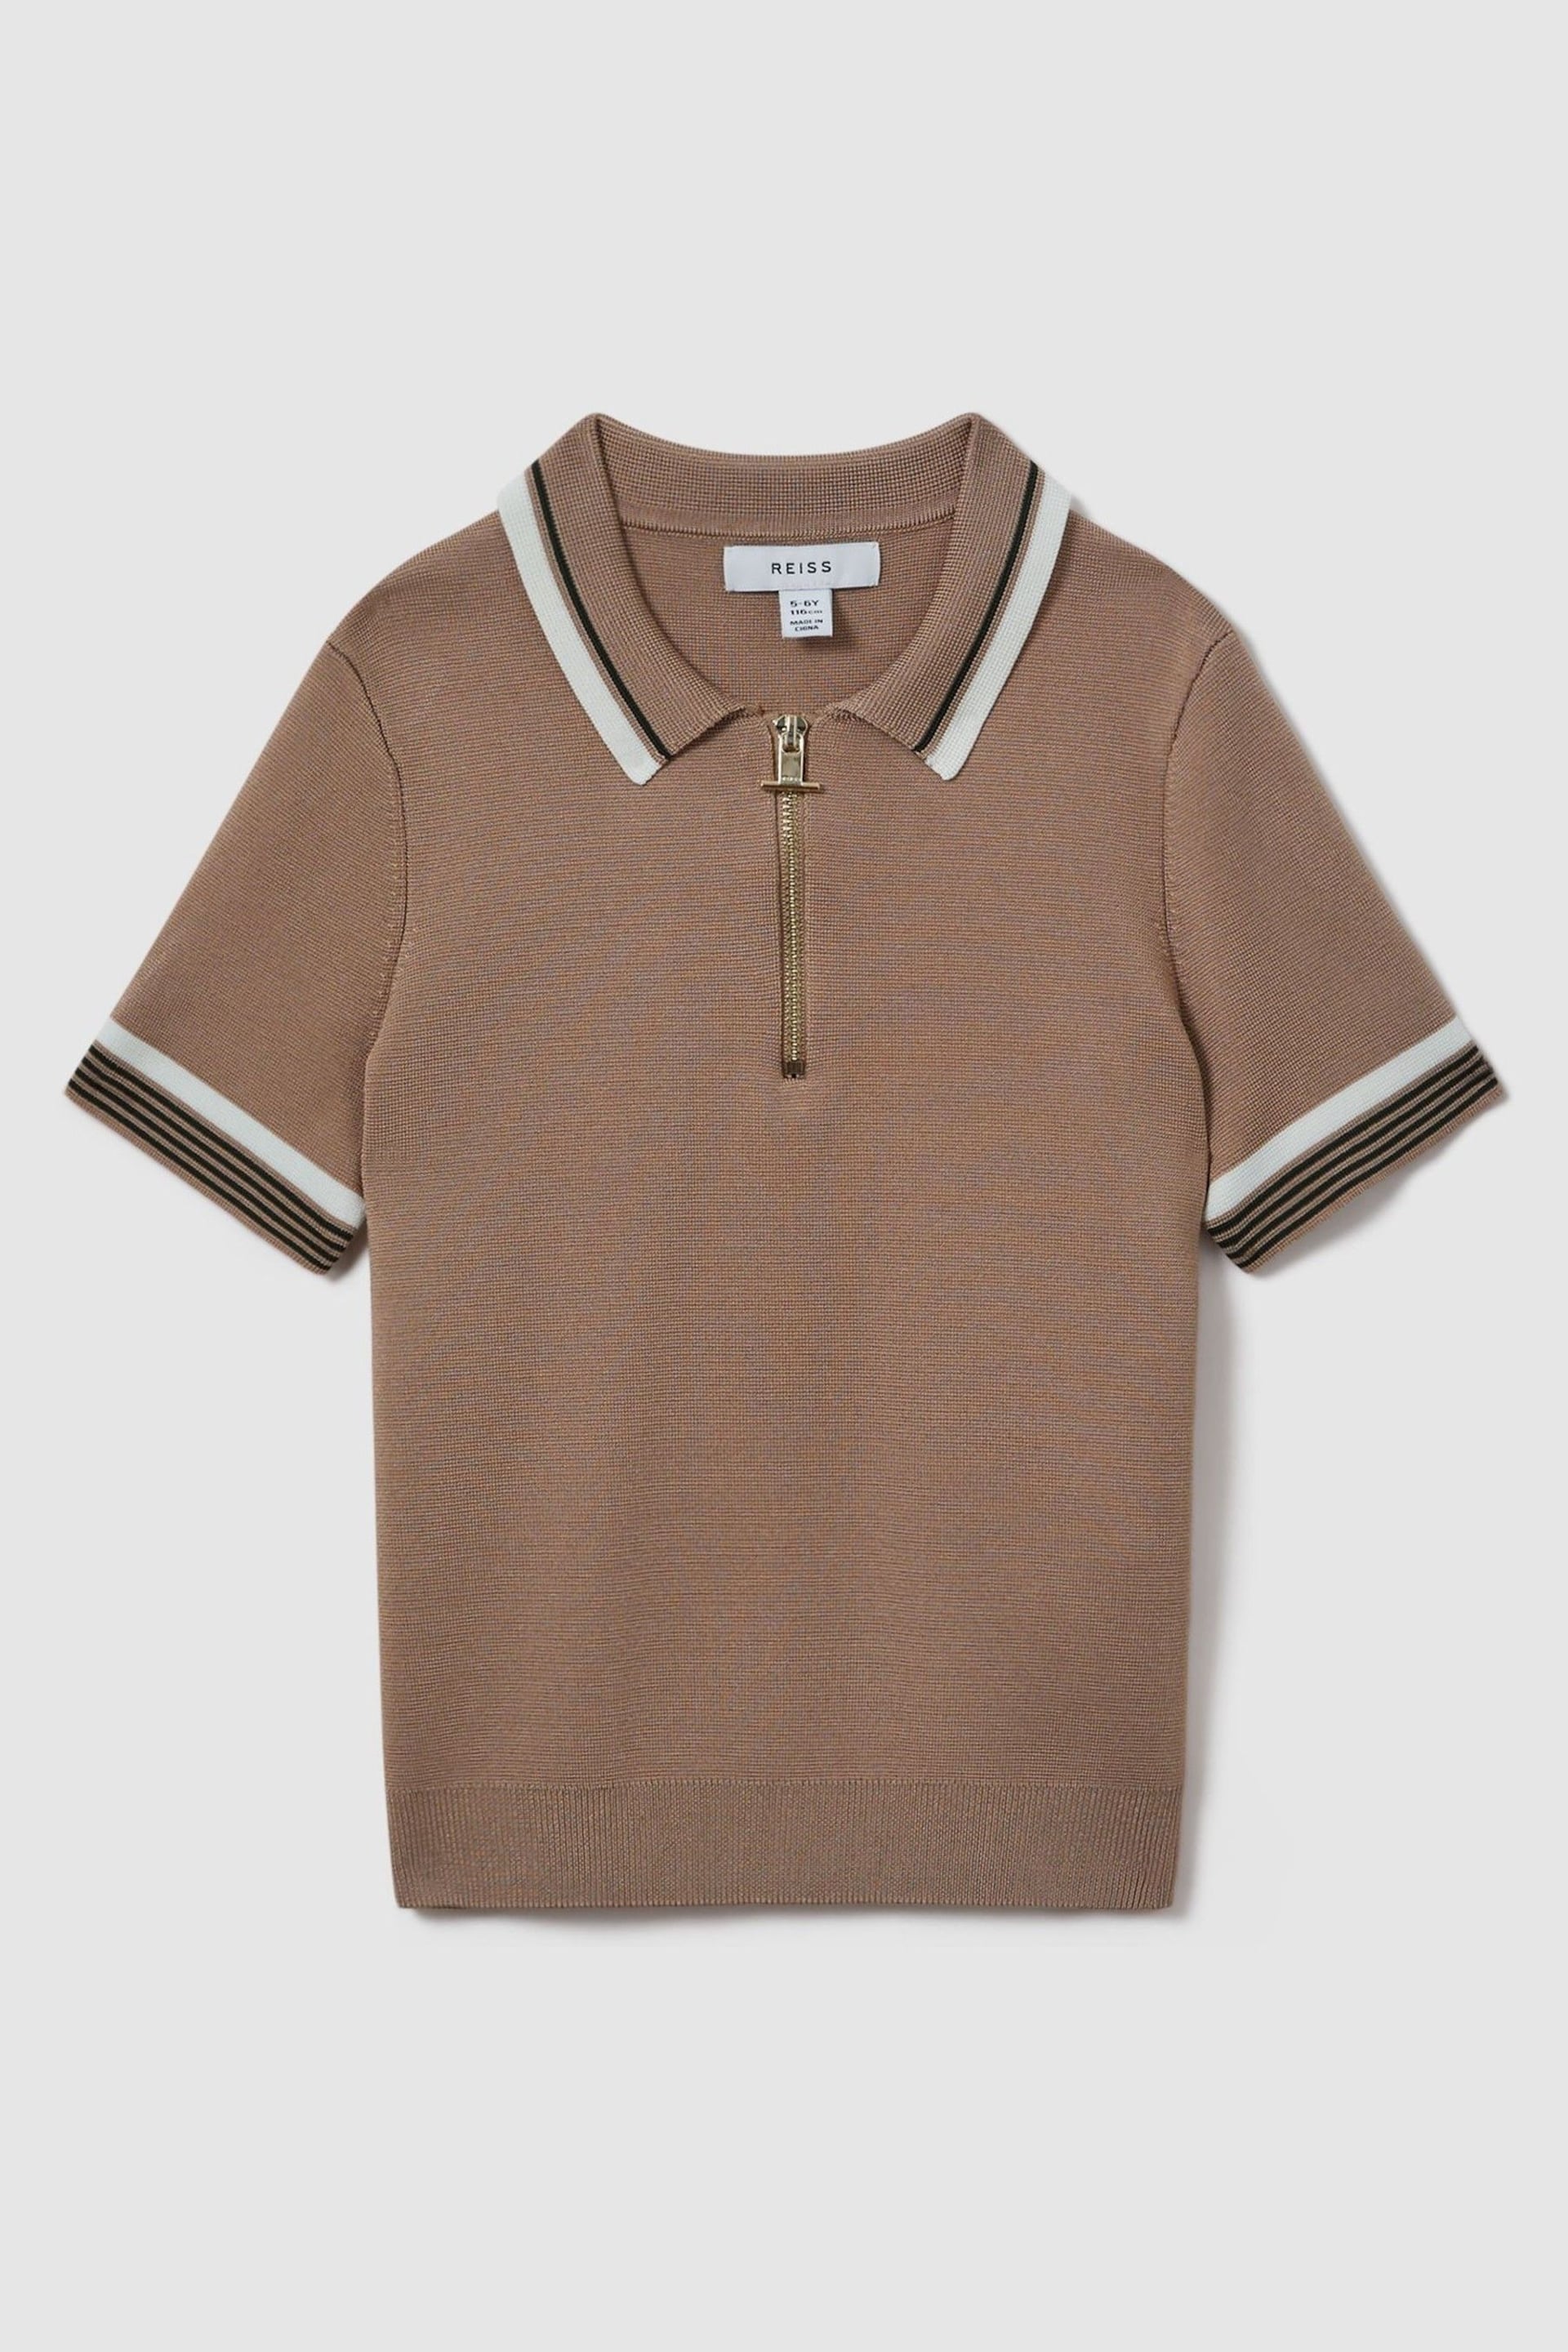 Reiss Warm Taupe Chelsea Senior Half-Zip Polo Shirt - Image 1 of 3